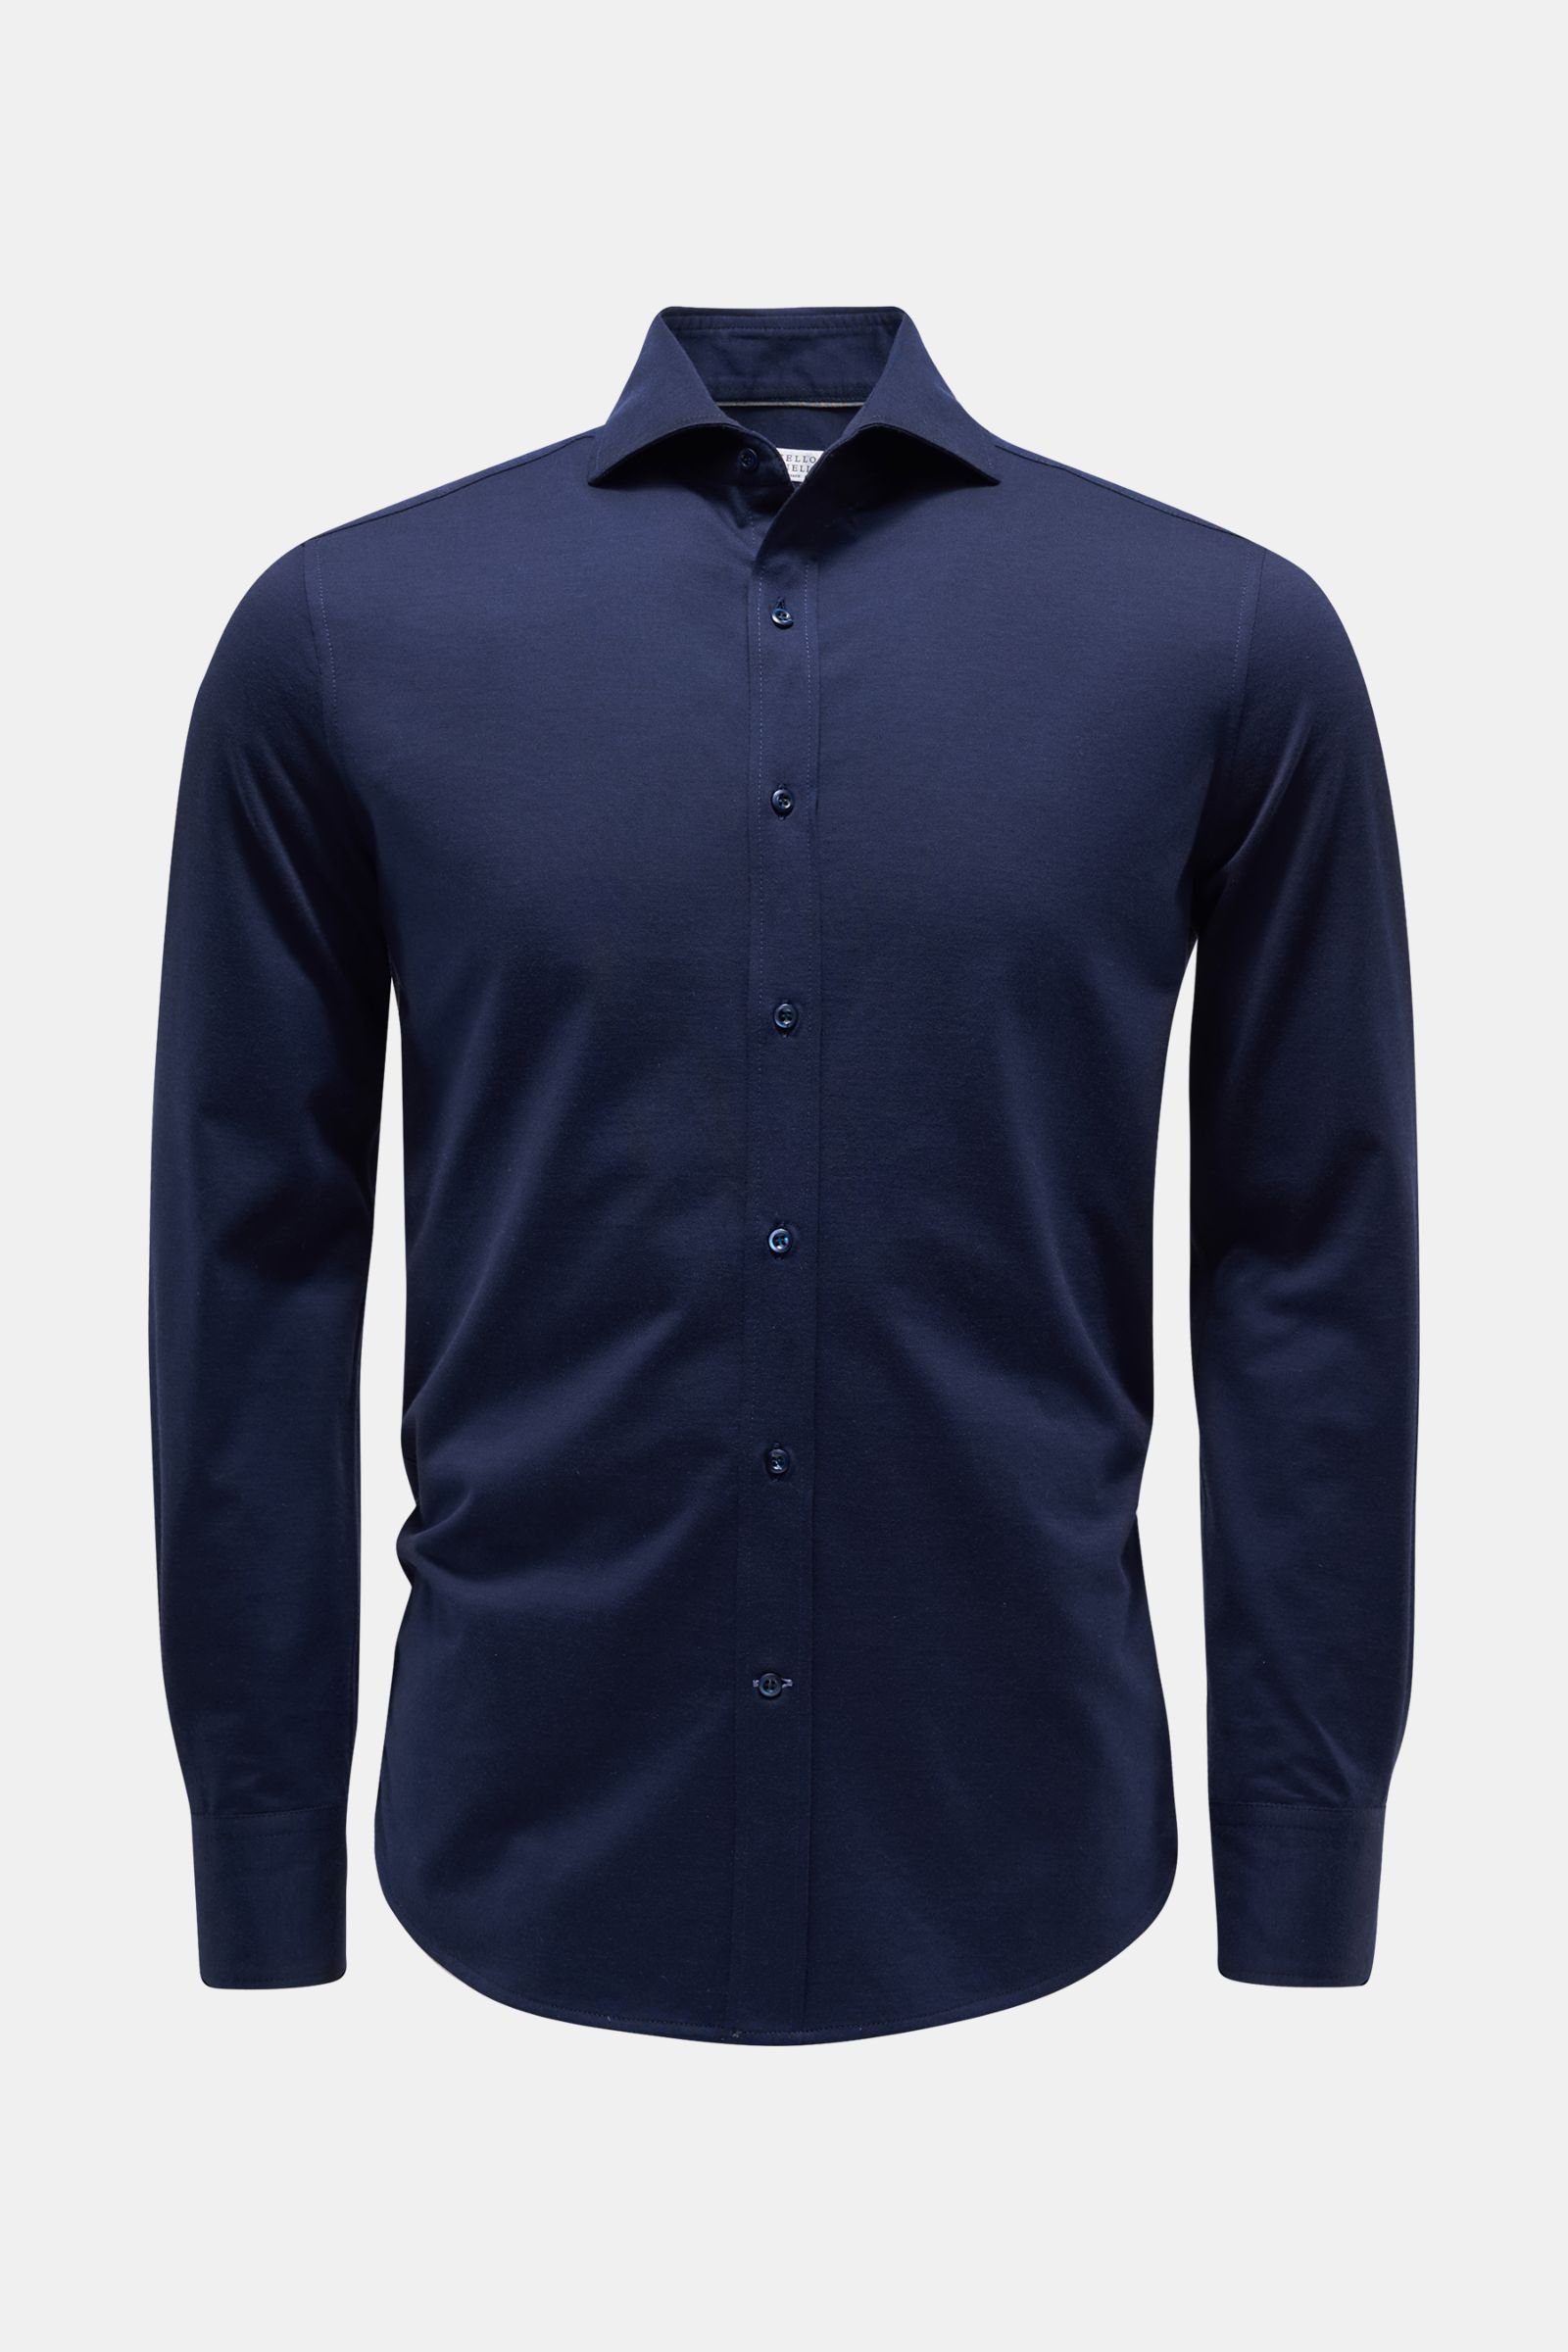 Jersey shirt shark collar dark blue